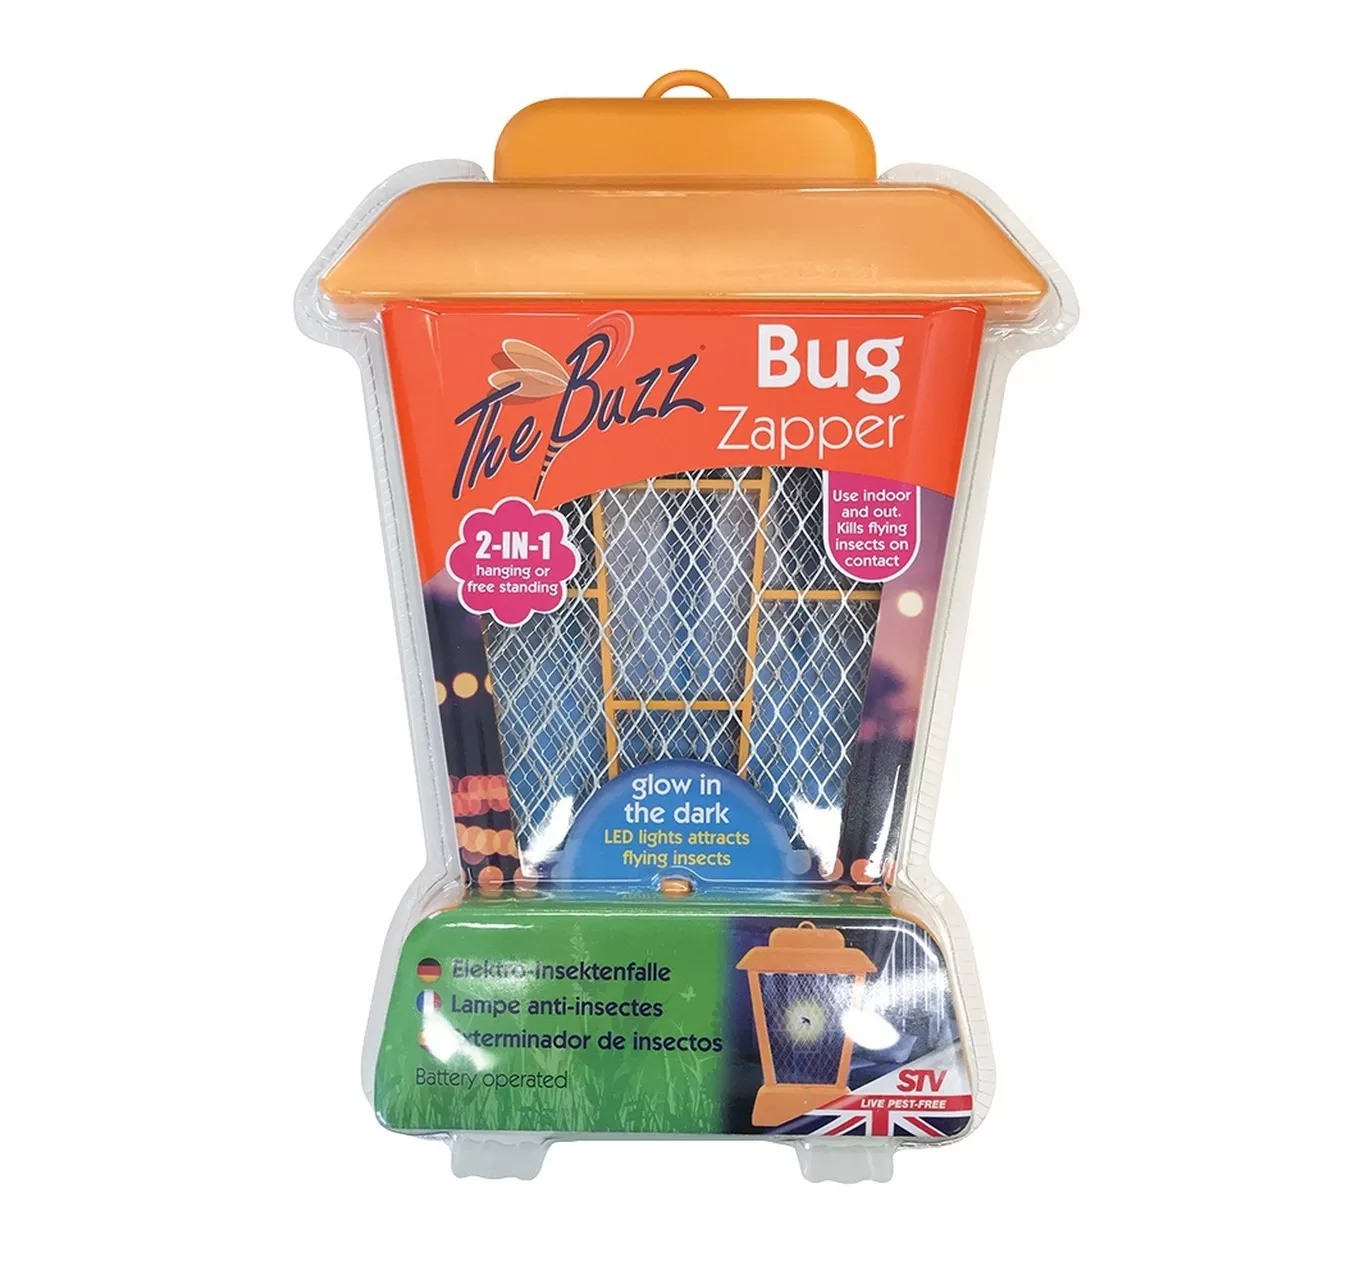 THE BUZZ Bug Zapper Lantern